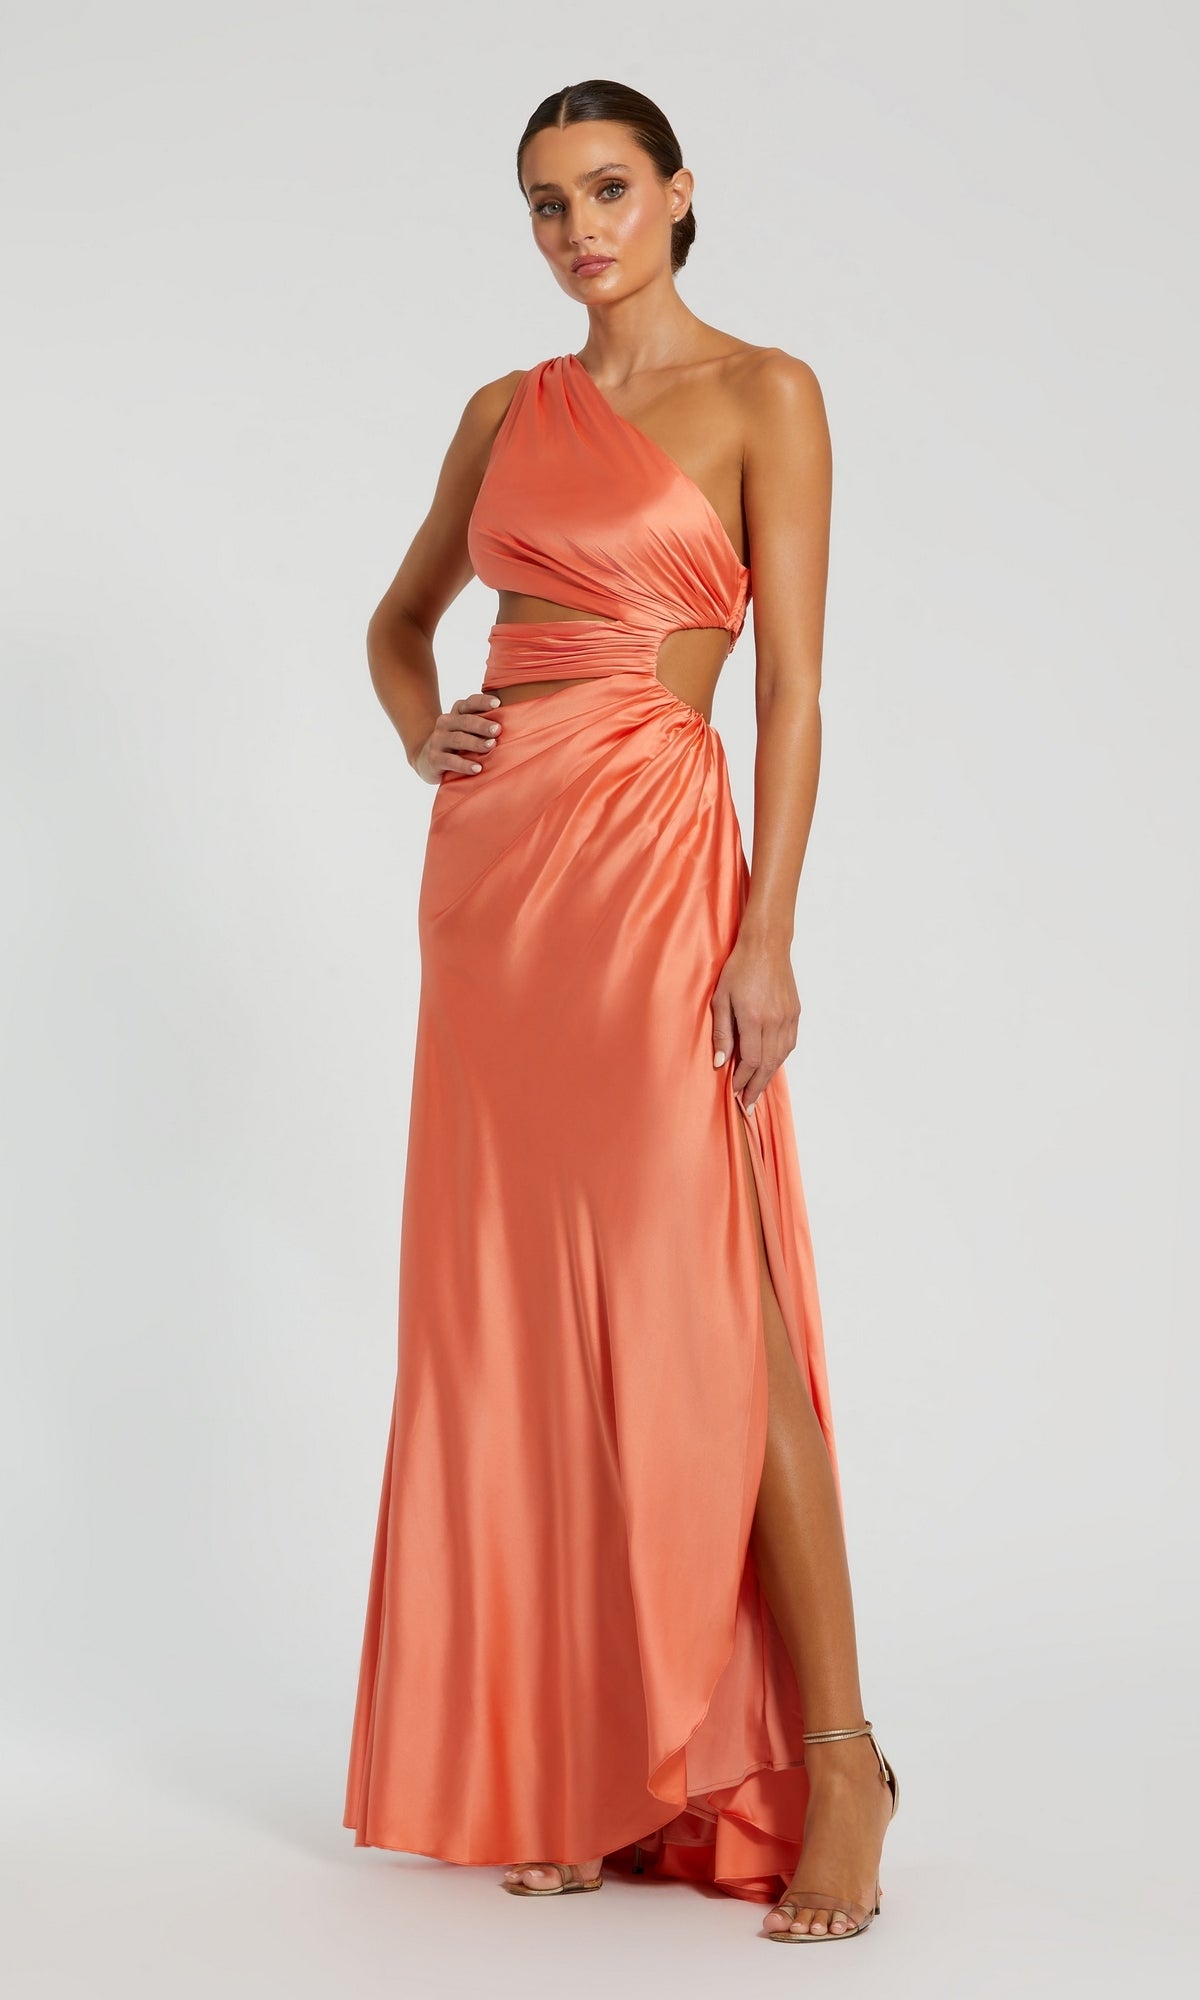 Long Formal Dress 68485 by Mac Duggal